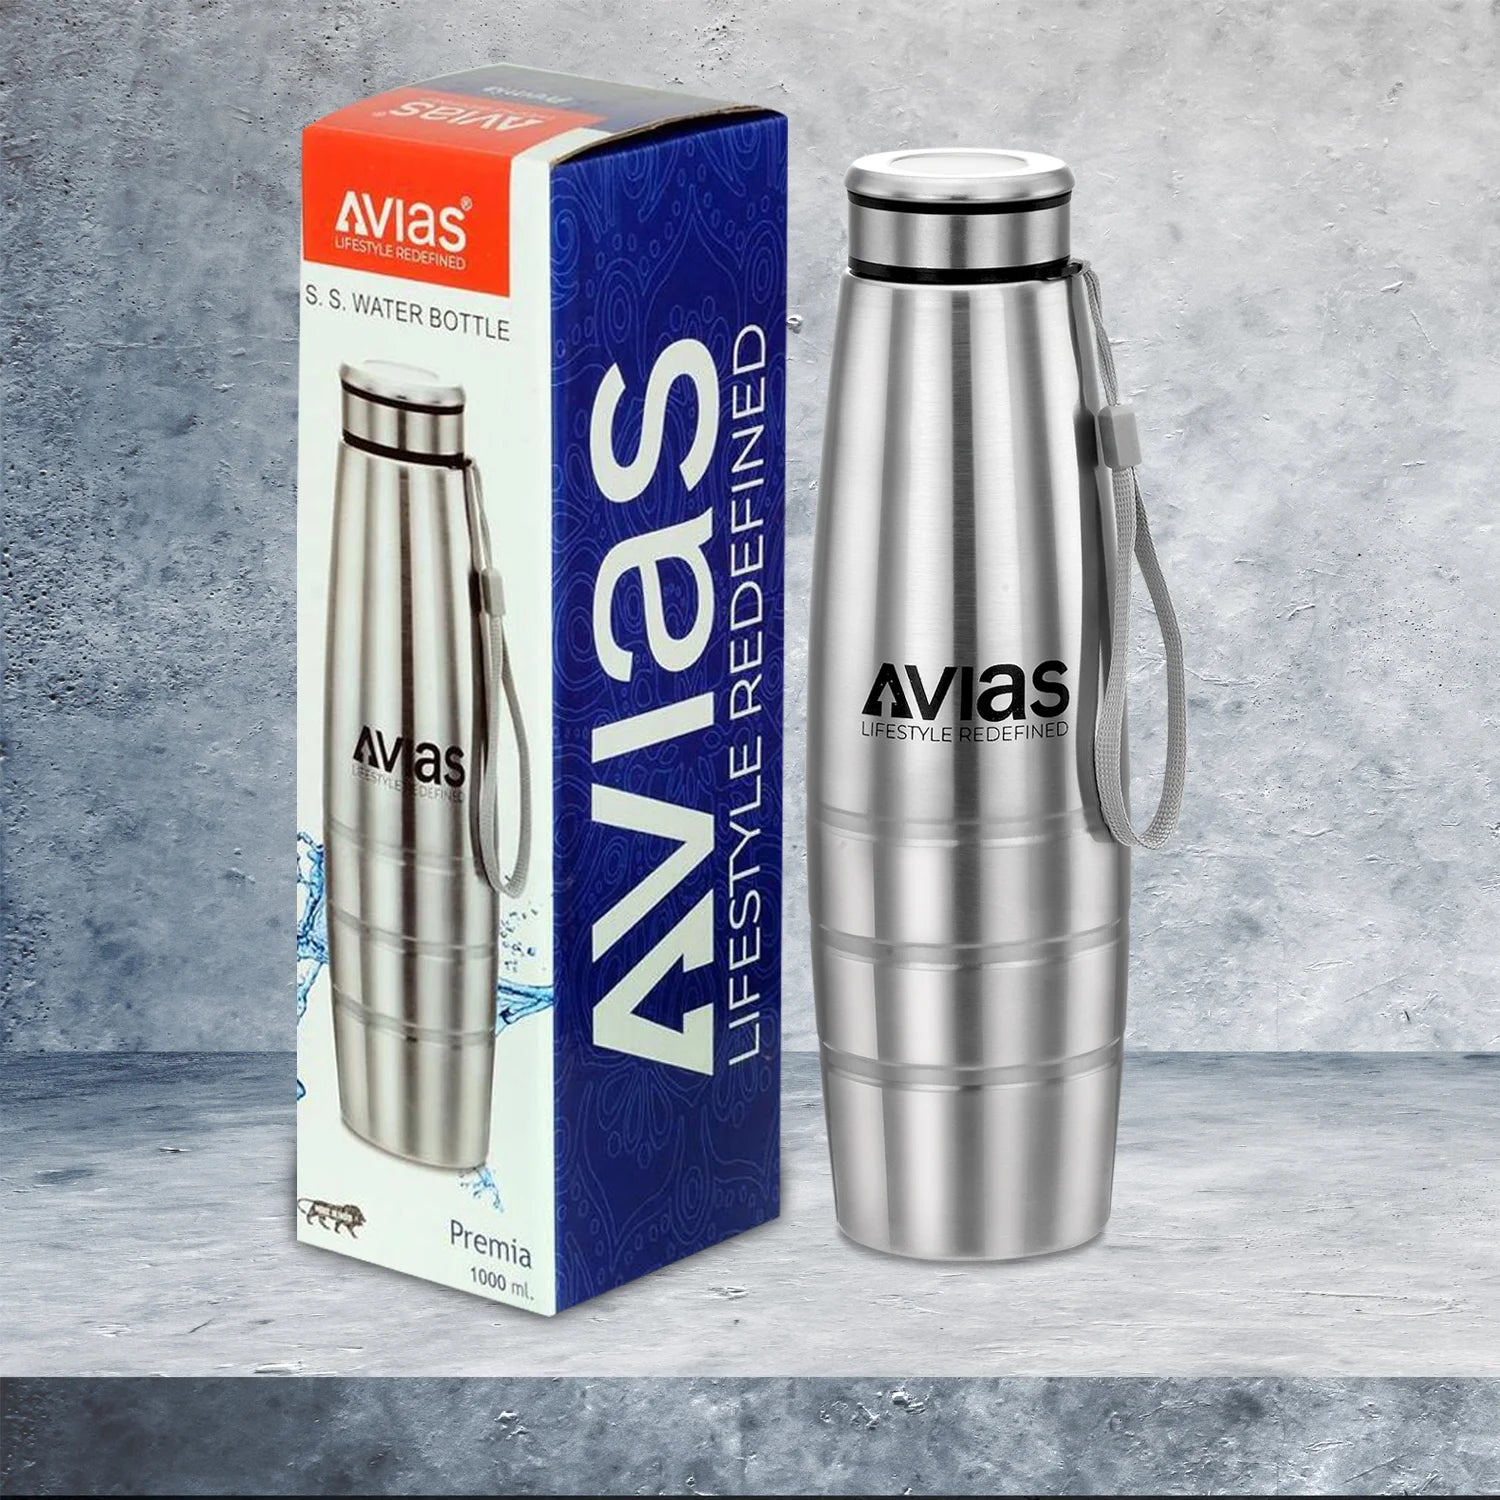 AVIAS Premia Stainless Steel Water Bottle package